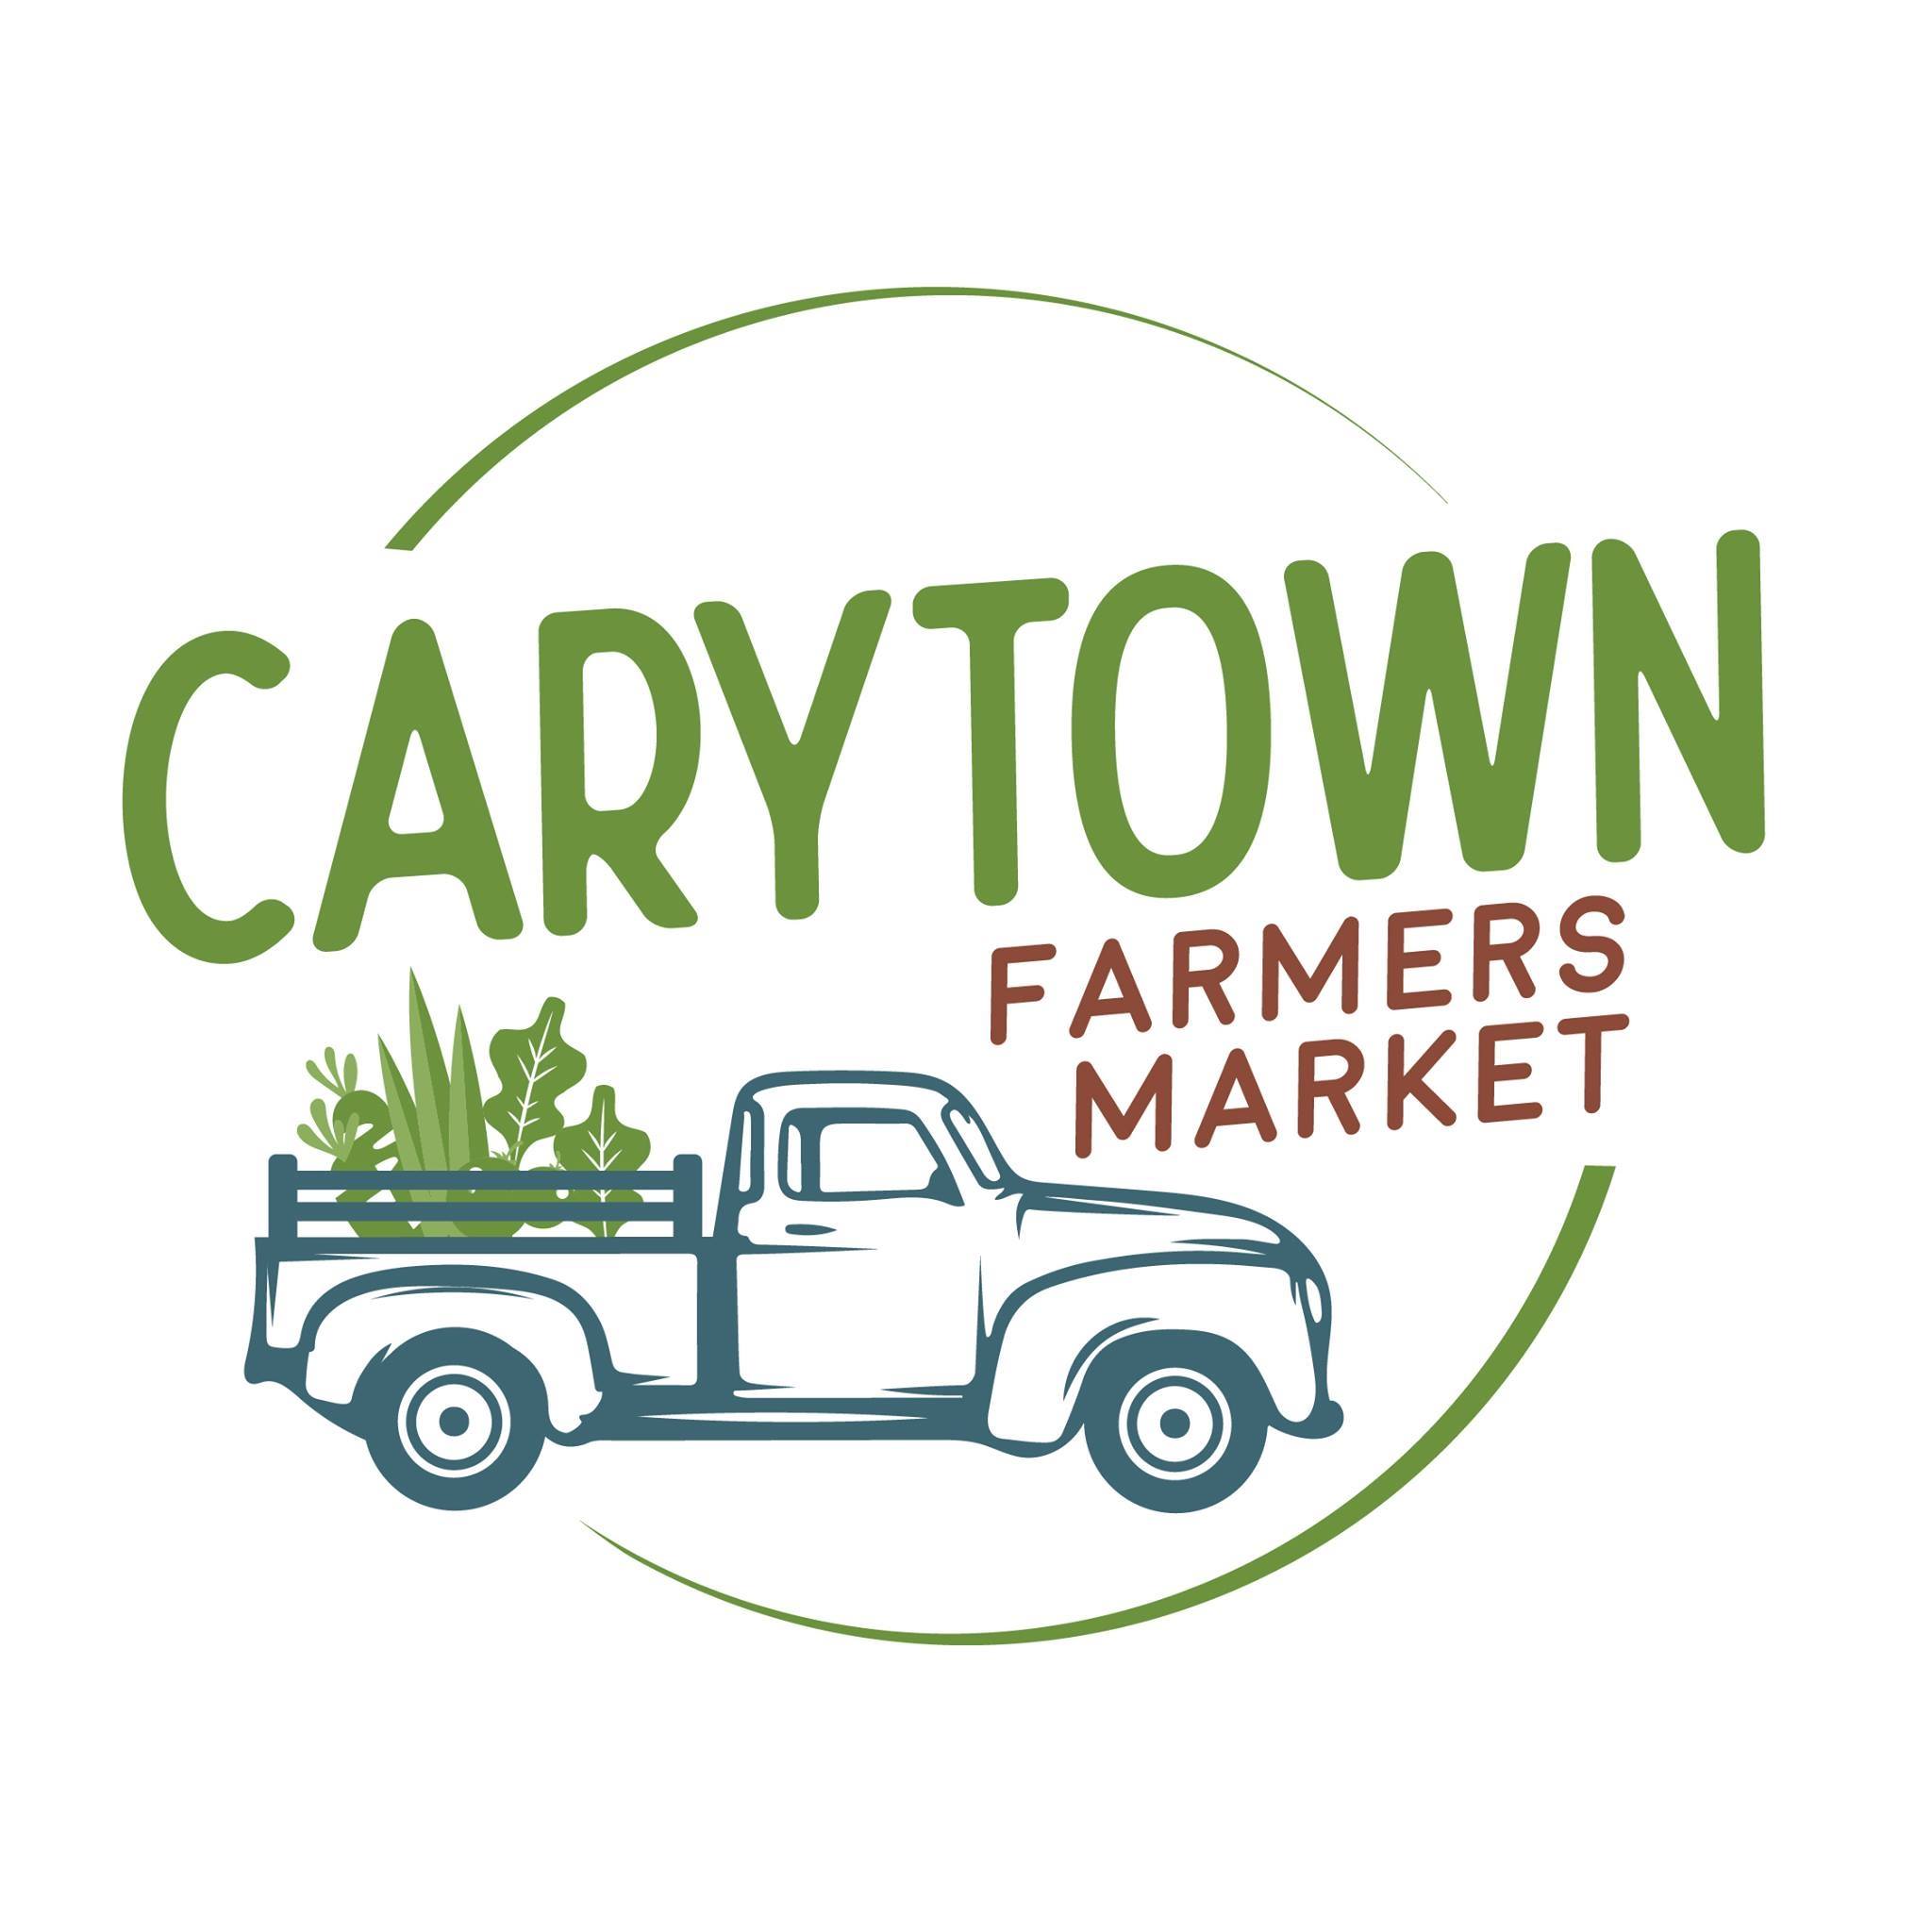 Carytown Farmers Market logo